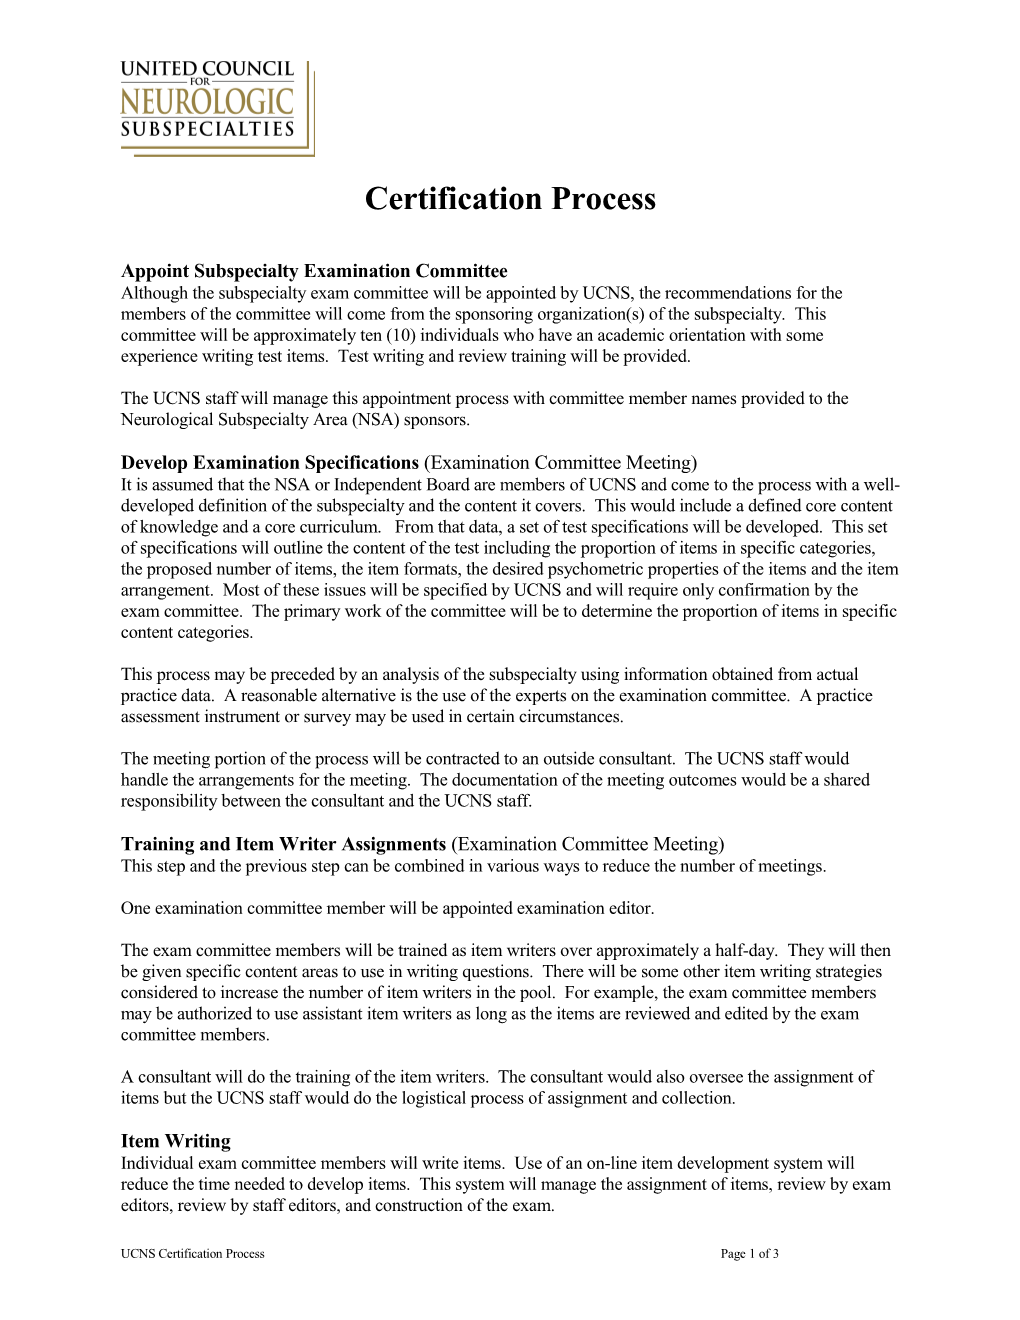 Certification Process Narrative